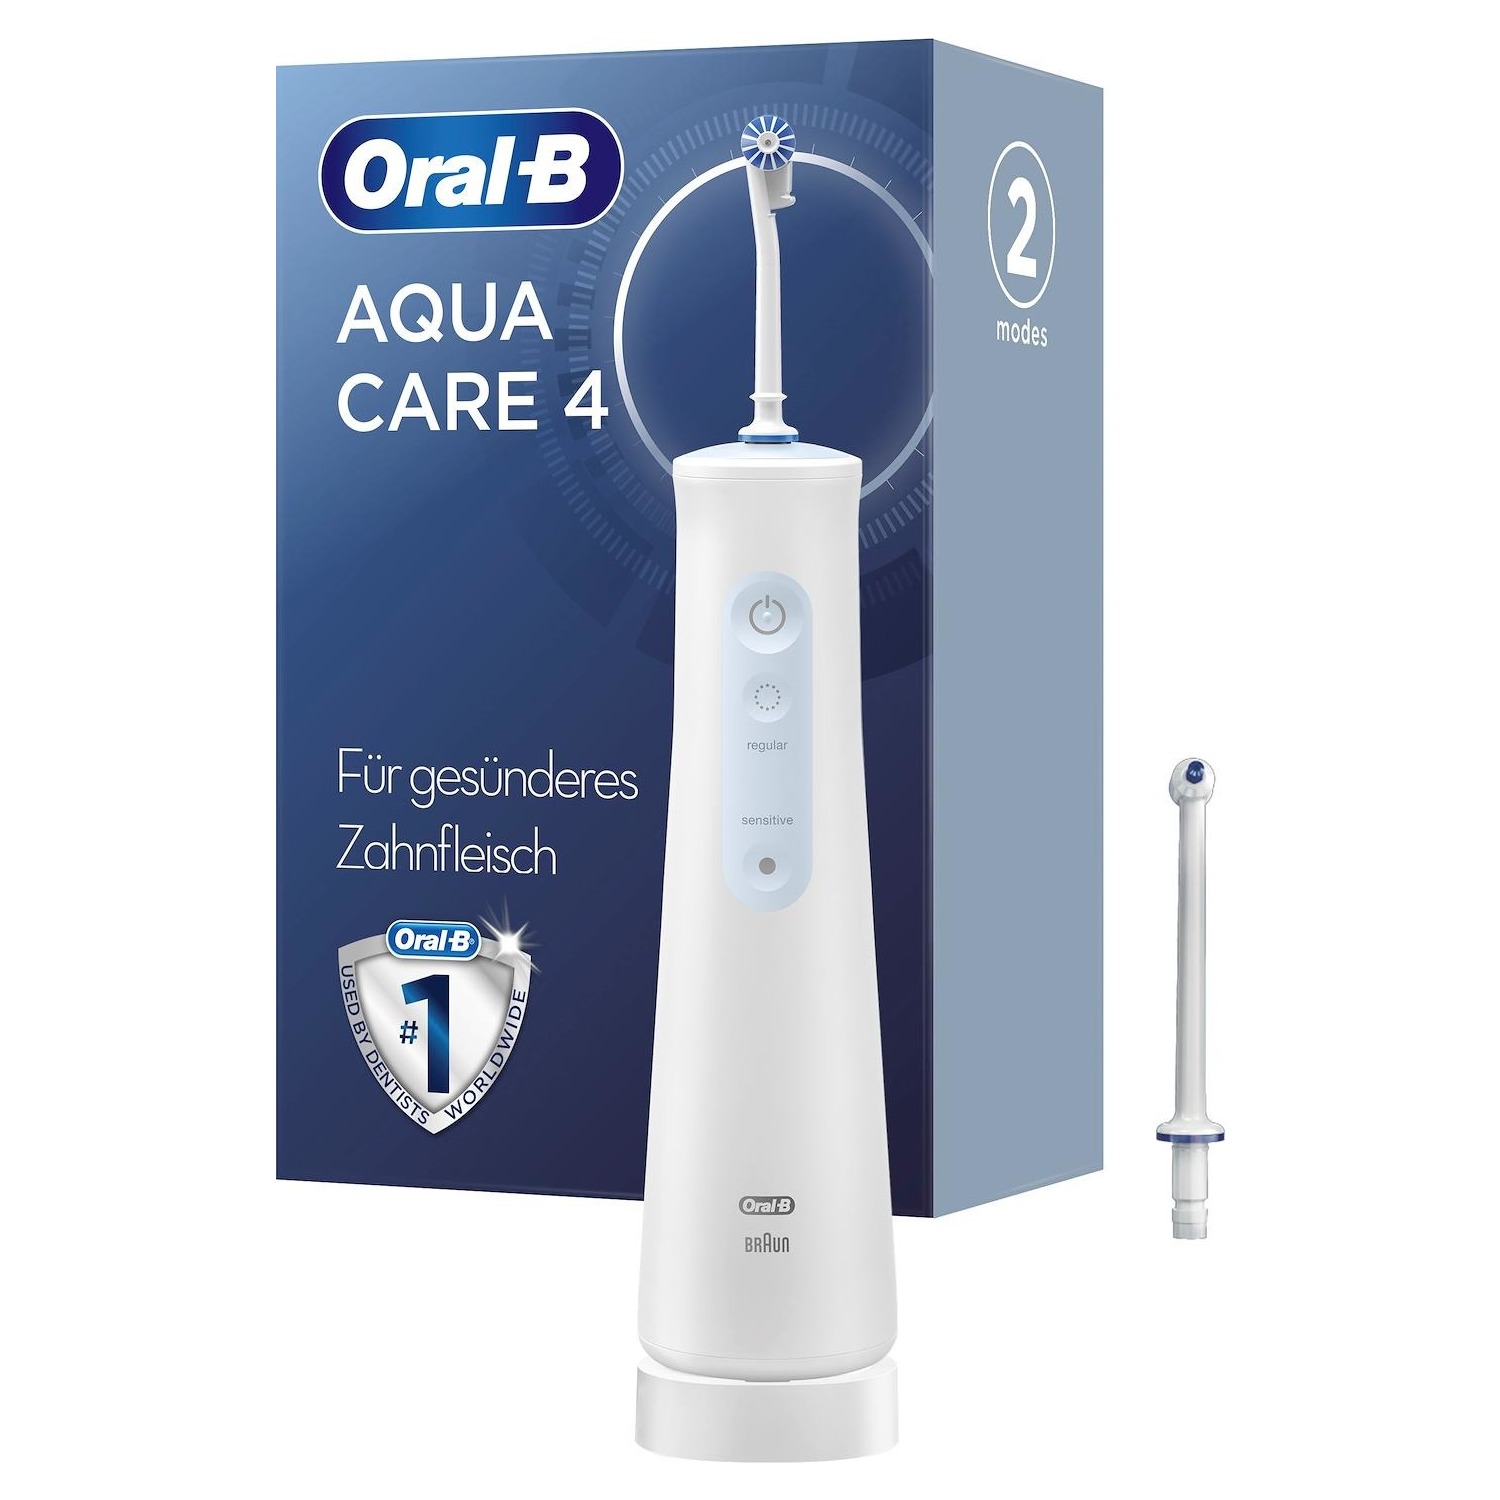 Idropulsore Braun Aquacare 4 Oral-B - DIMOStore